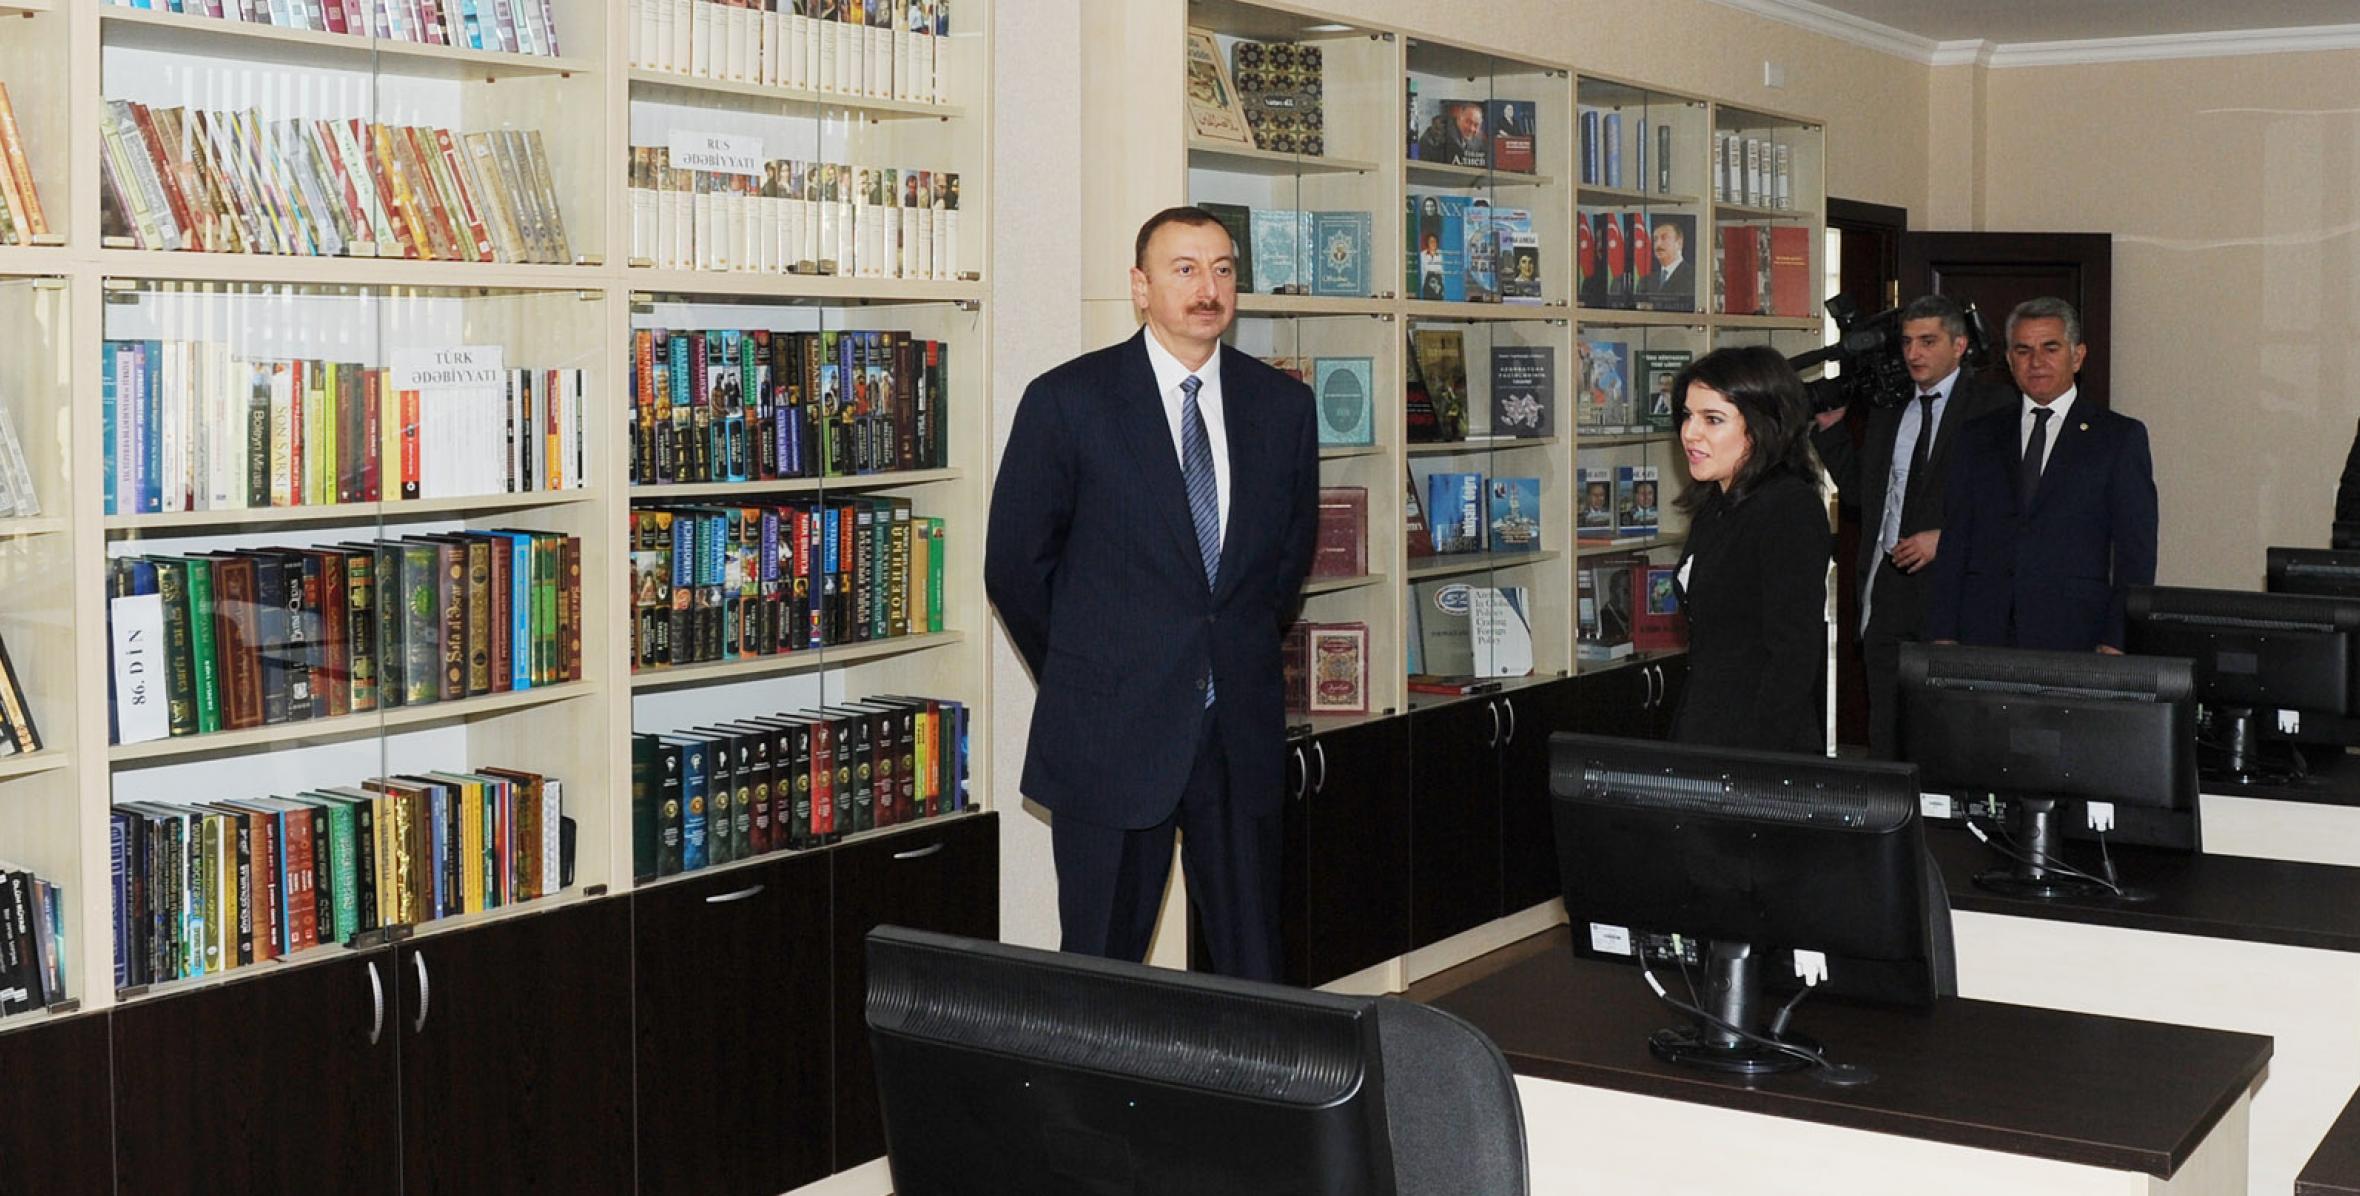 Ilham Aliyev attended the opening of the Heydar Aliyev Center in Astara